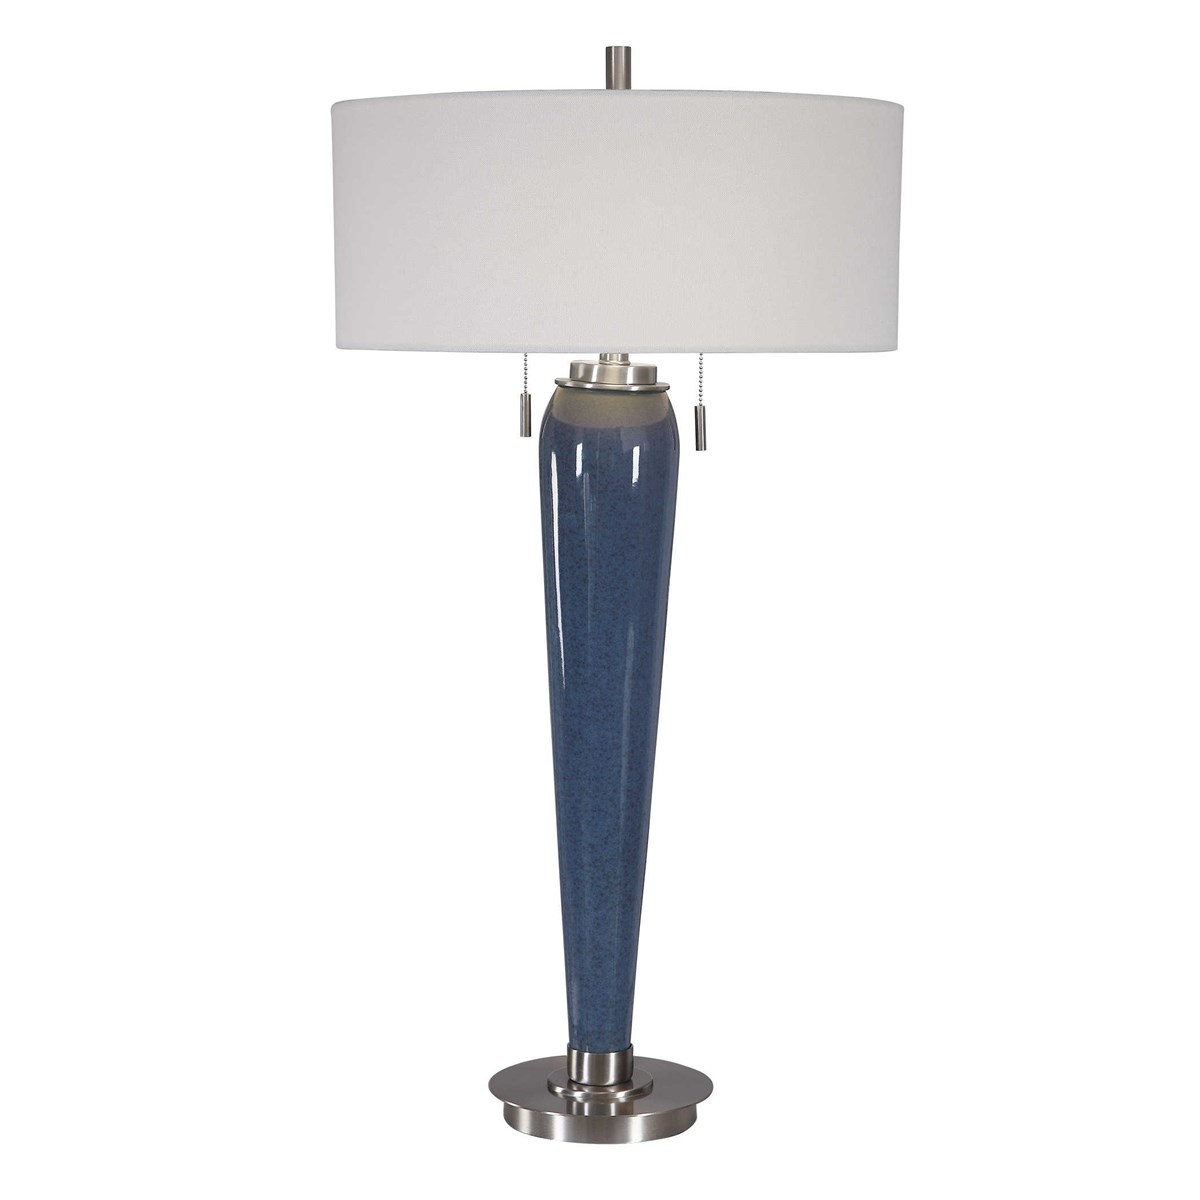 Godfrey Table Lamp